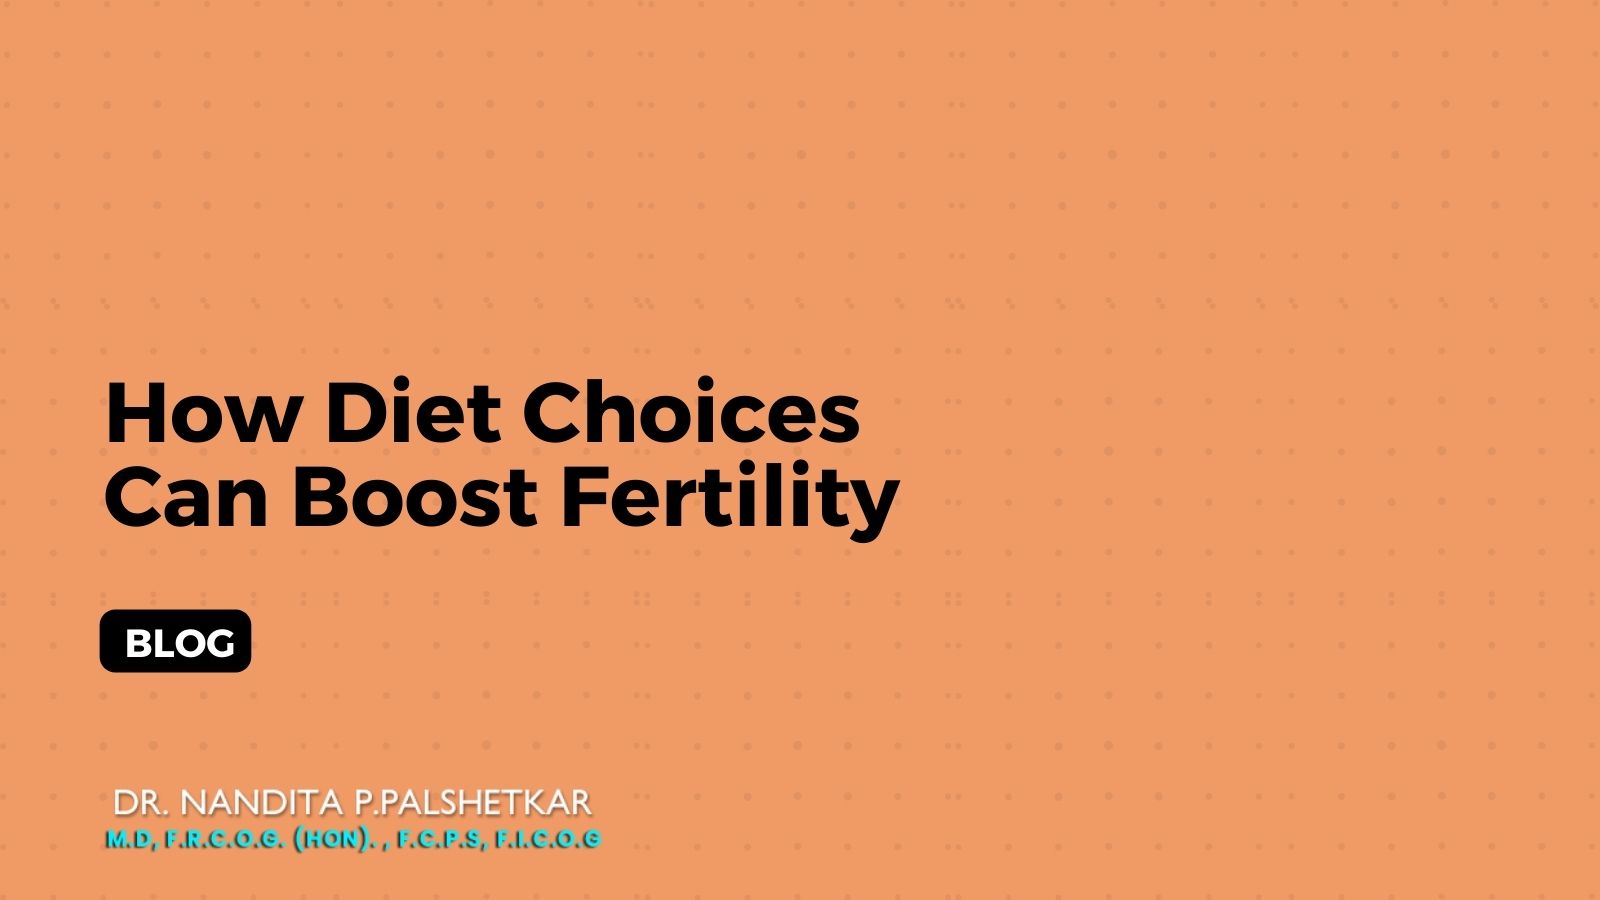 Can diet improve fertility